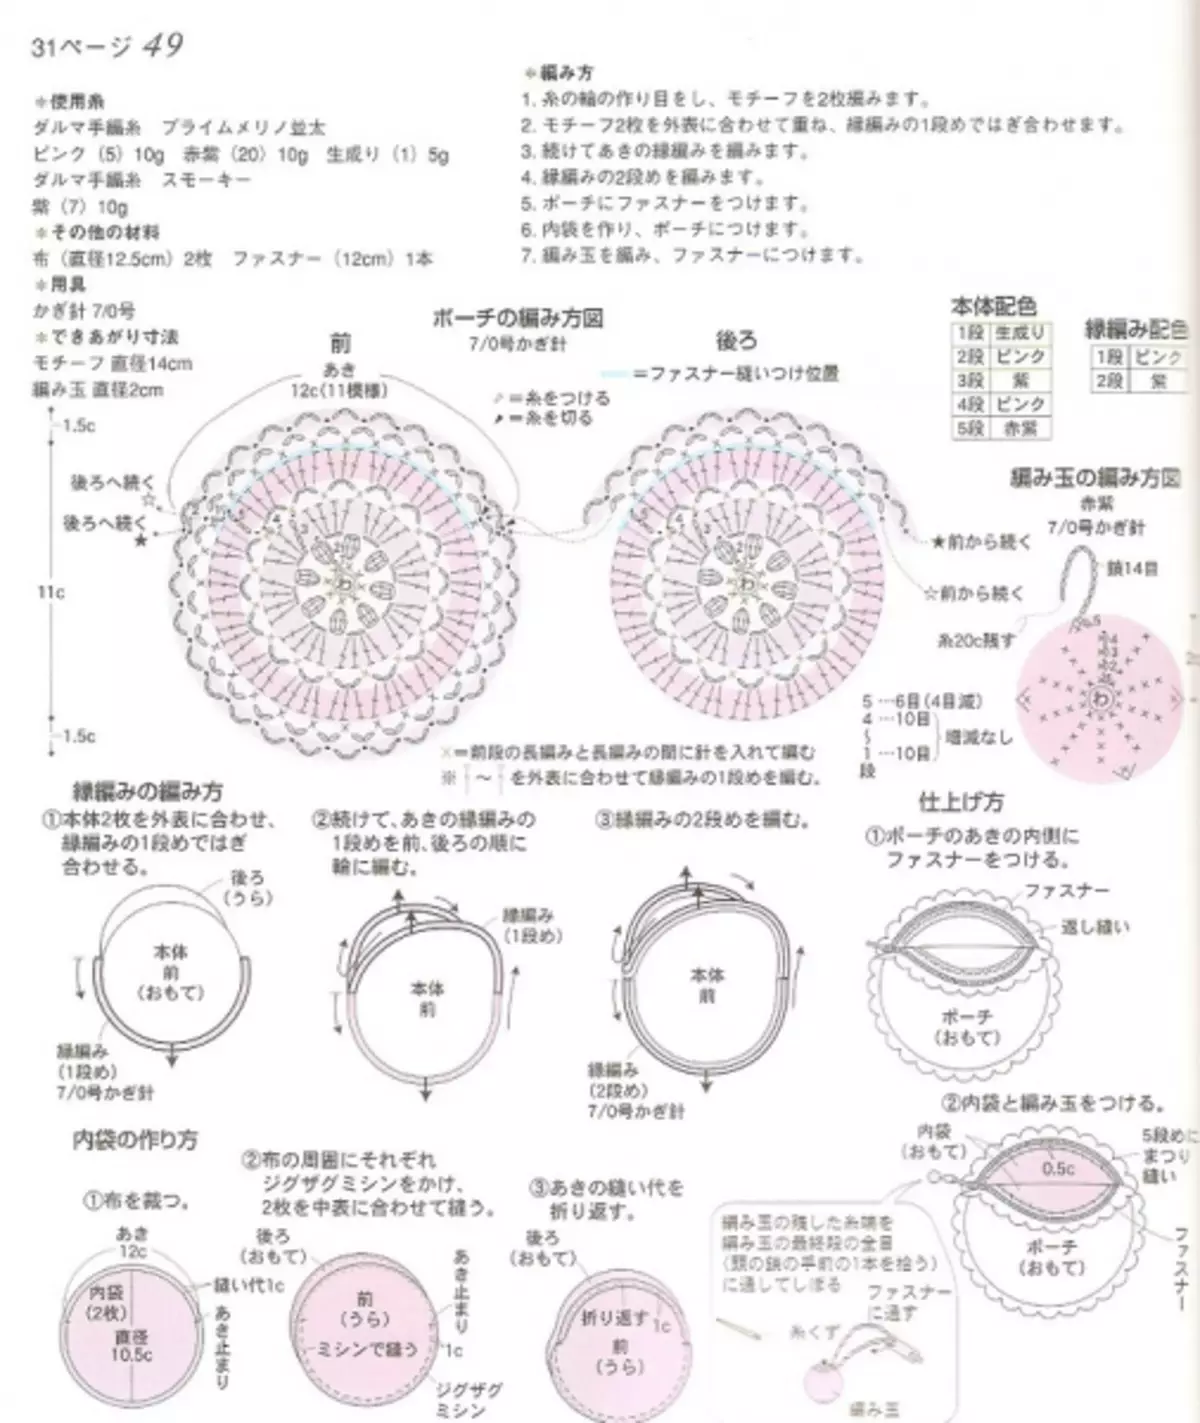 Revista xaponesa con esquemas de crochê